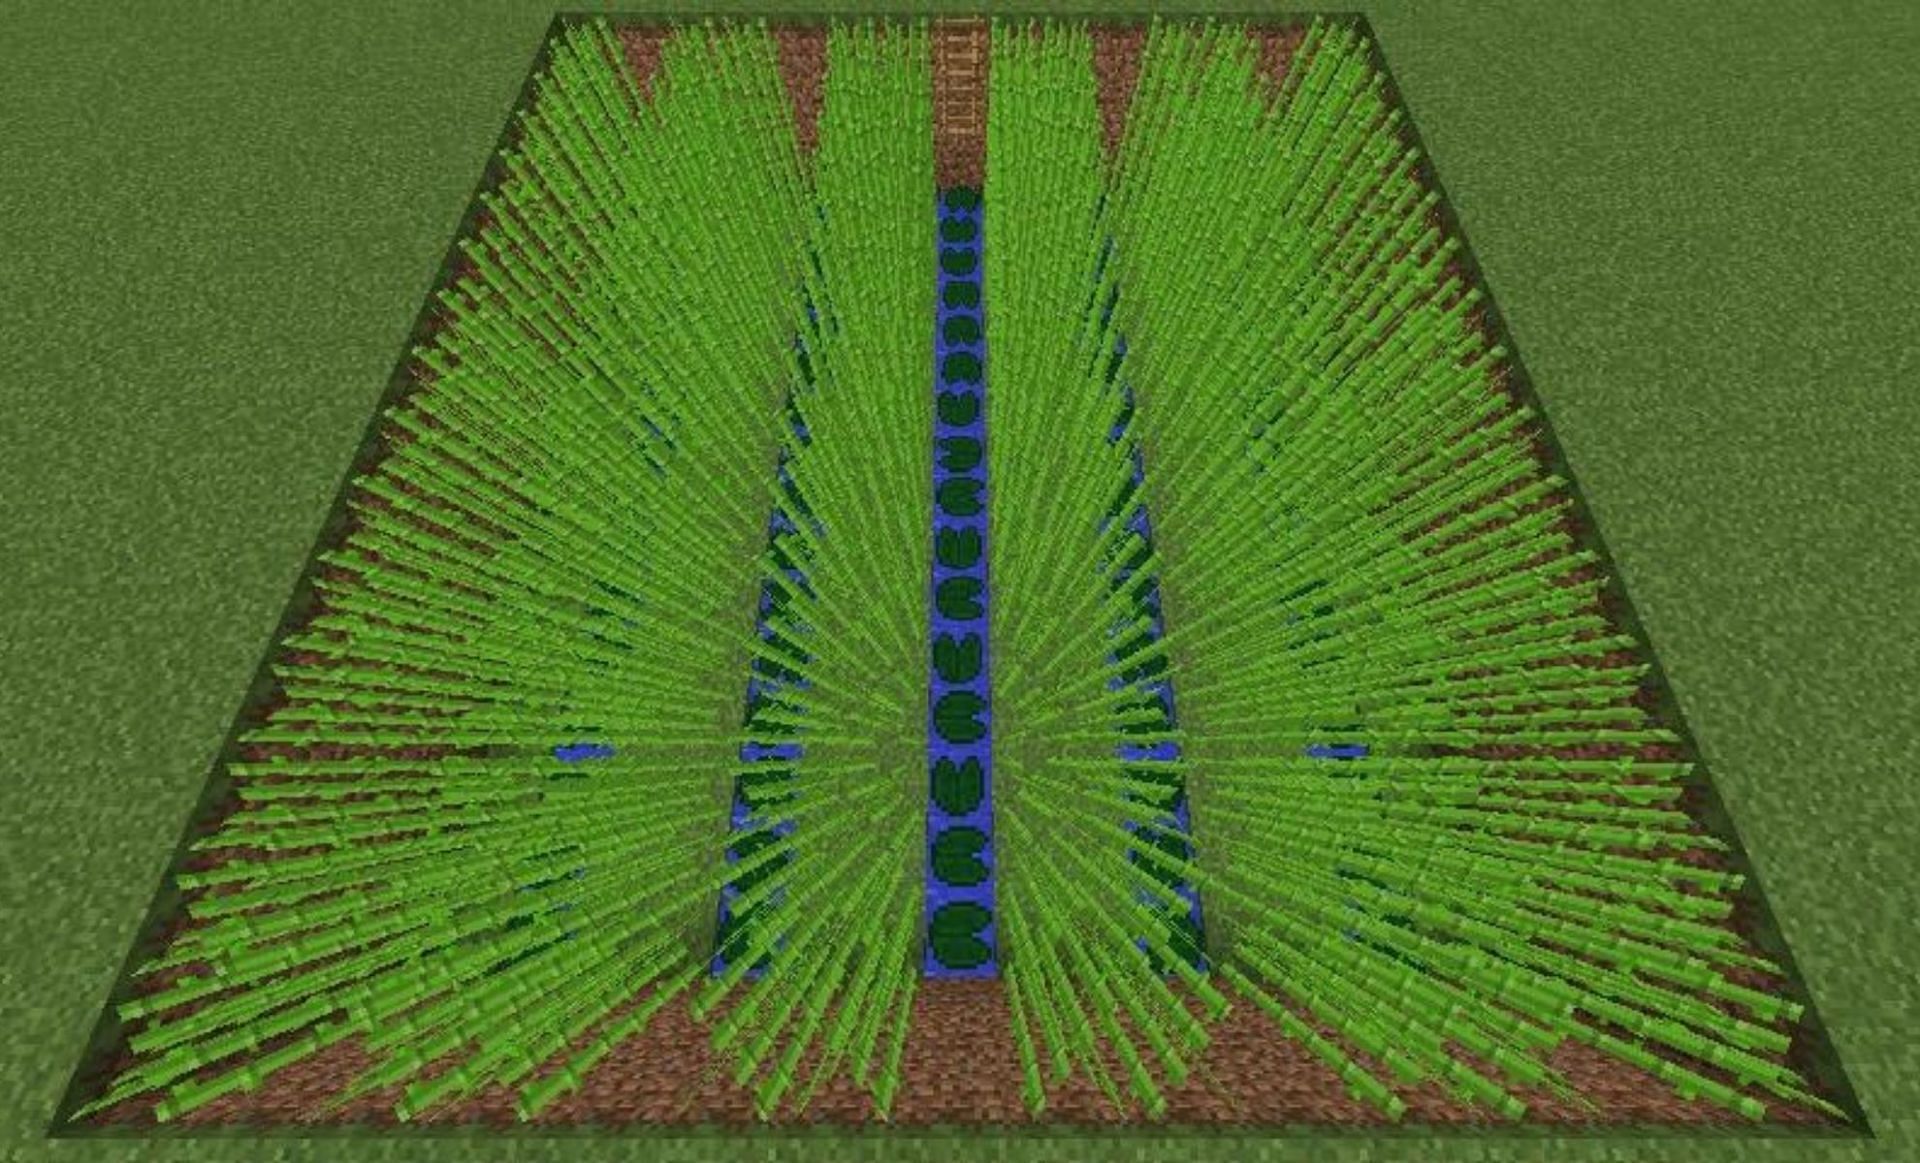 A sugar cane farm (Image via Minecraft Wiki)